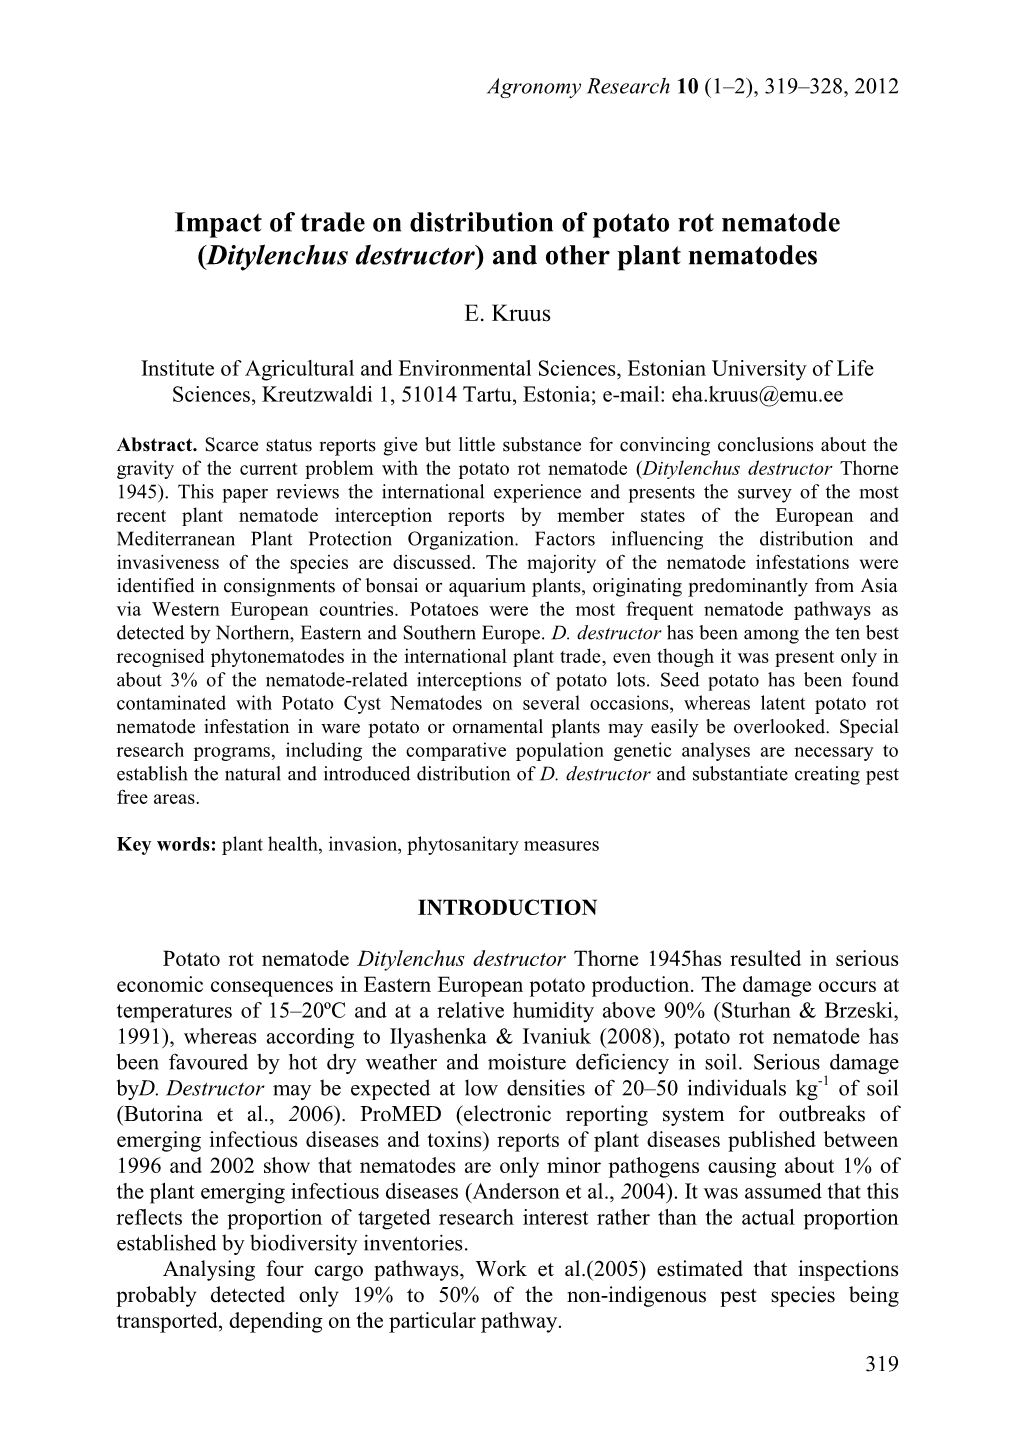 Impact of Trade on Distribution of Potato Rot Nematode (Ditylenchus Destructor) and Other Plant Nematodes